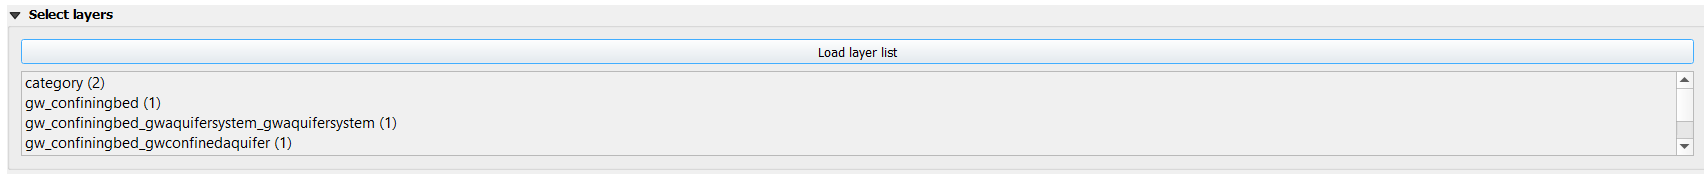 GMLAS-Load-layer-list-HydroGeoUnit